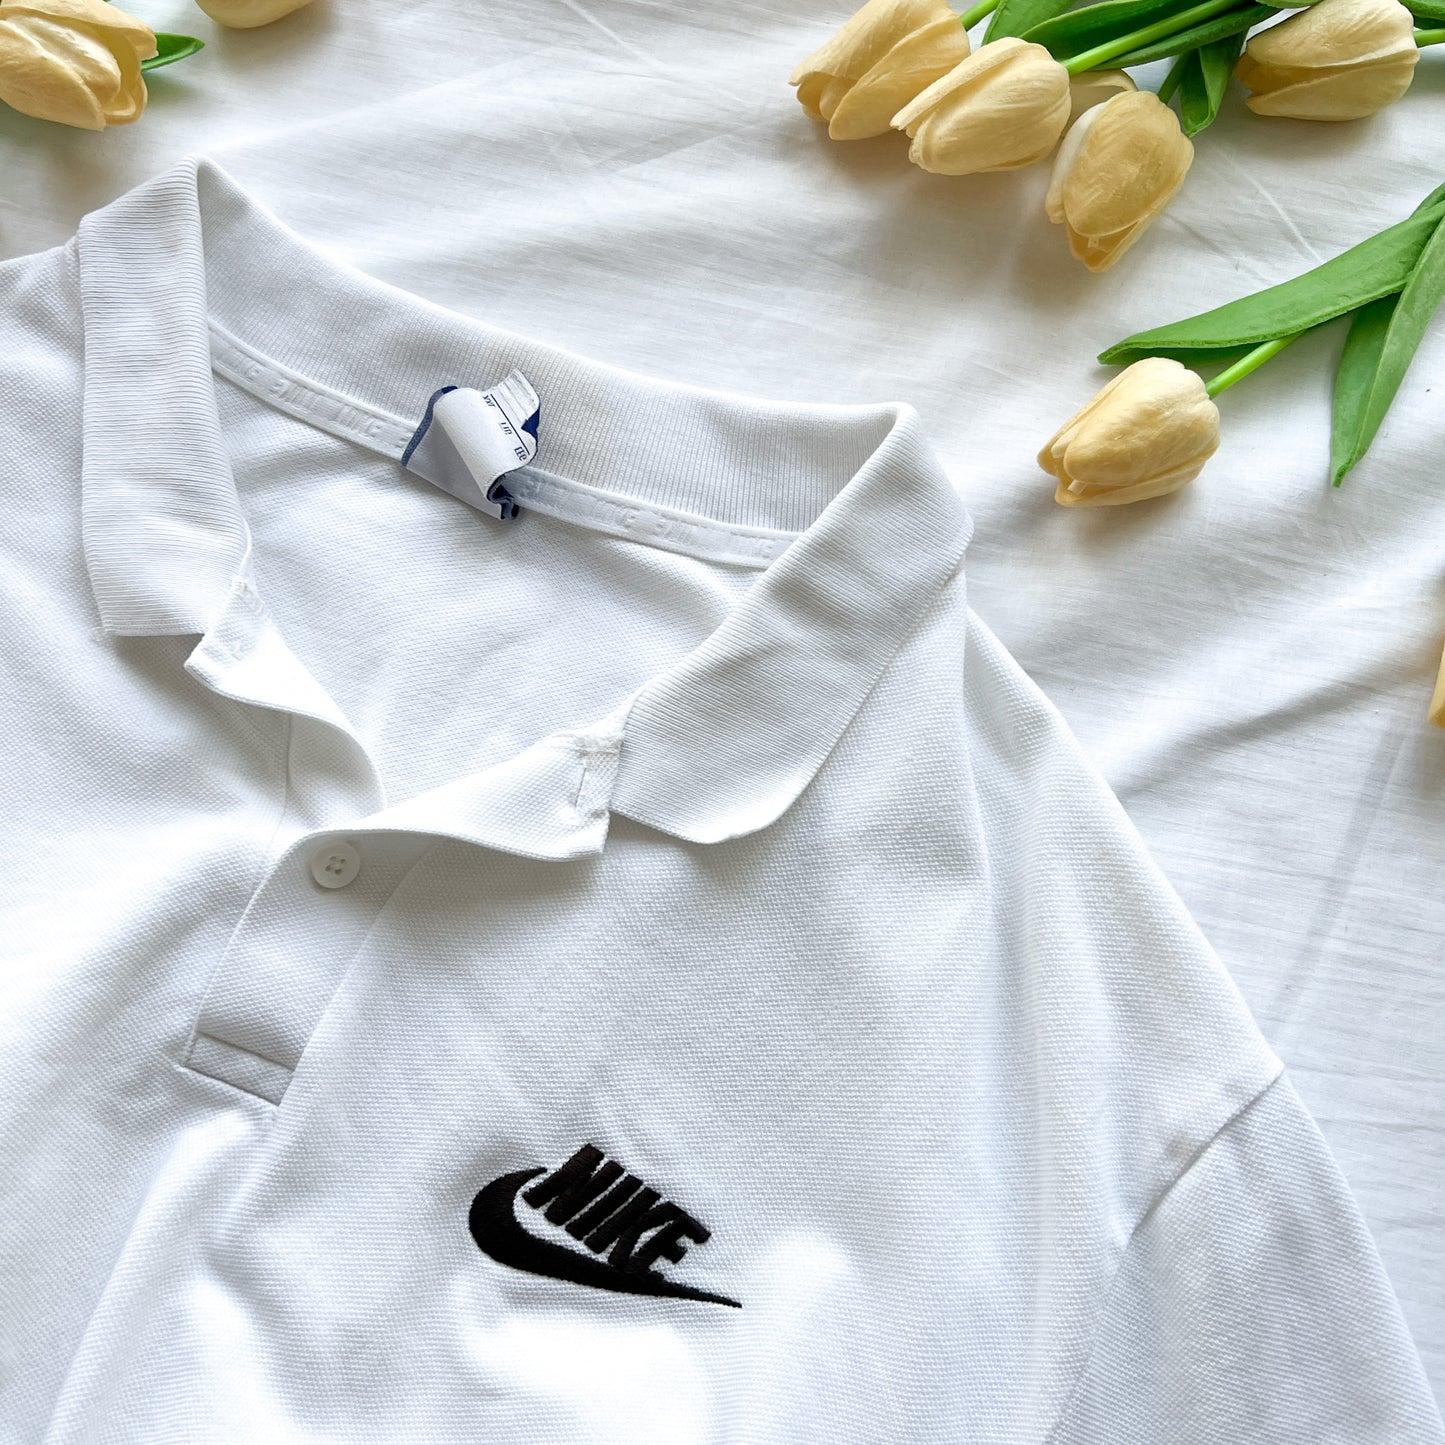 (XL) Nike polo crop vintage white OUTLET